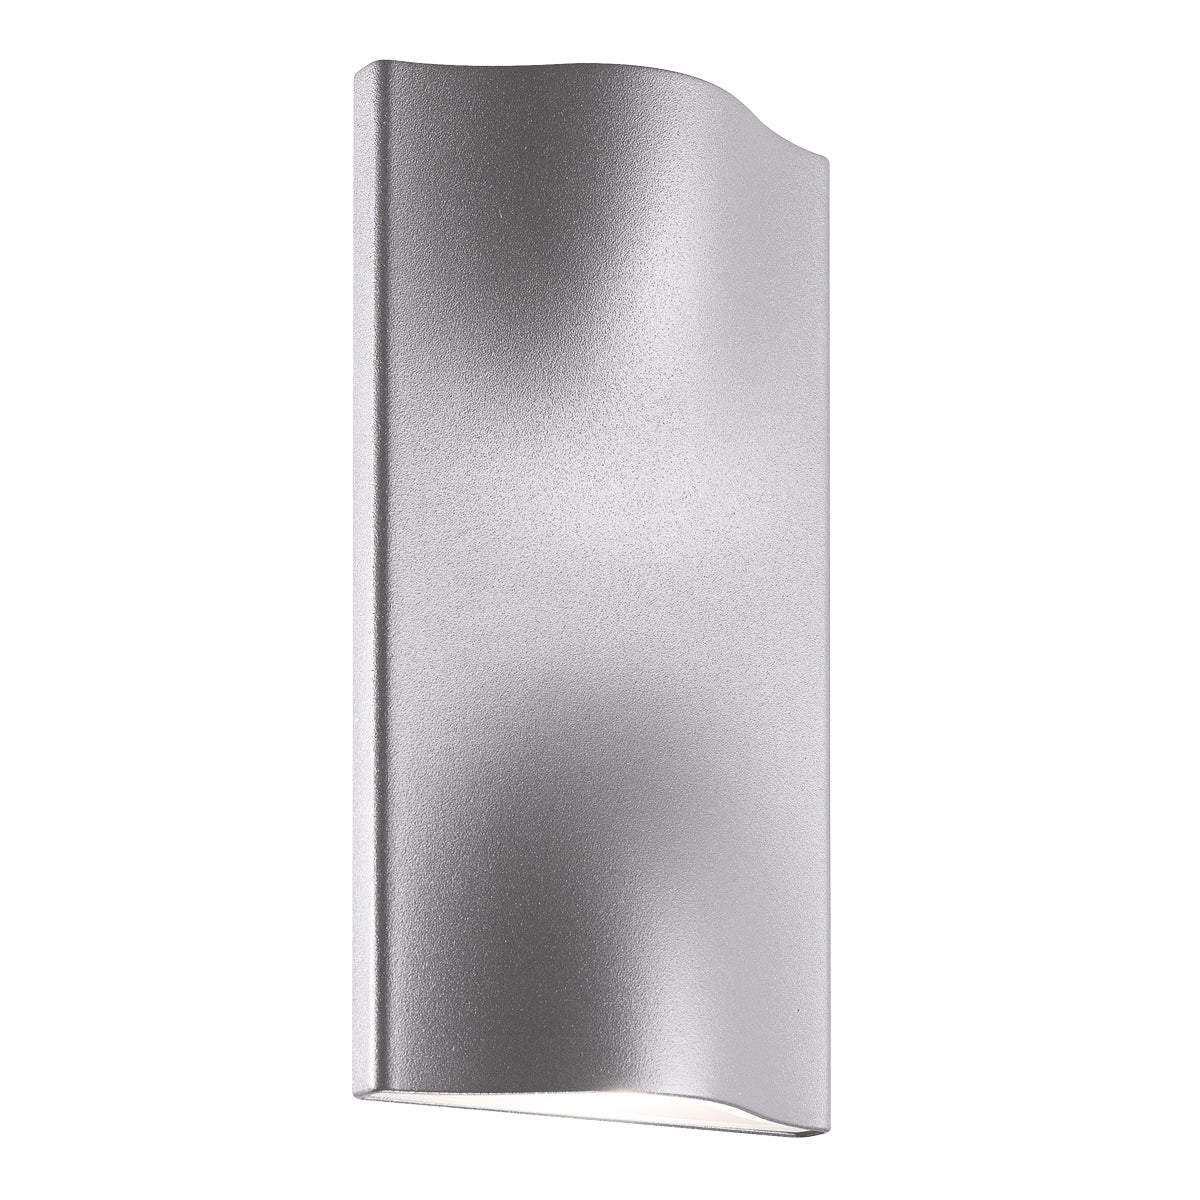 HAVEN Outdoor sconce Aluminum - 28278-016 | EUROFASE